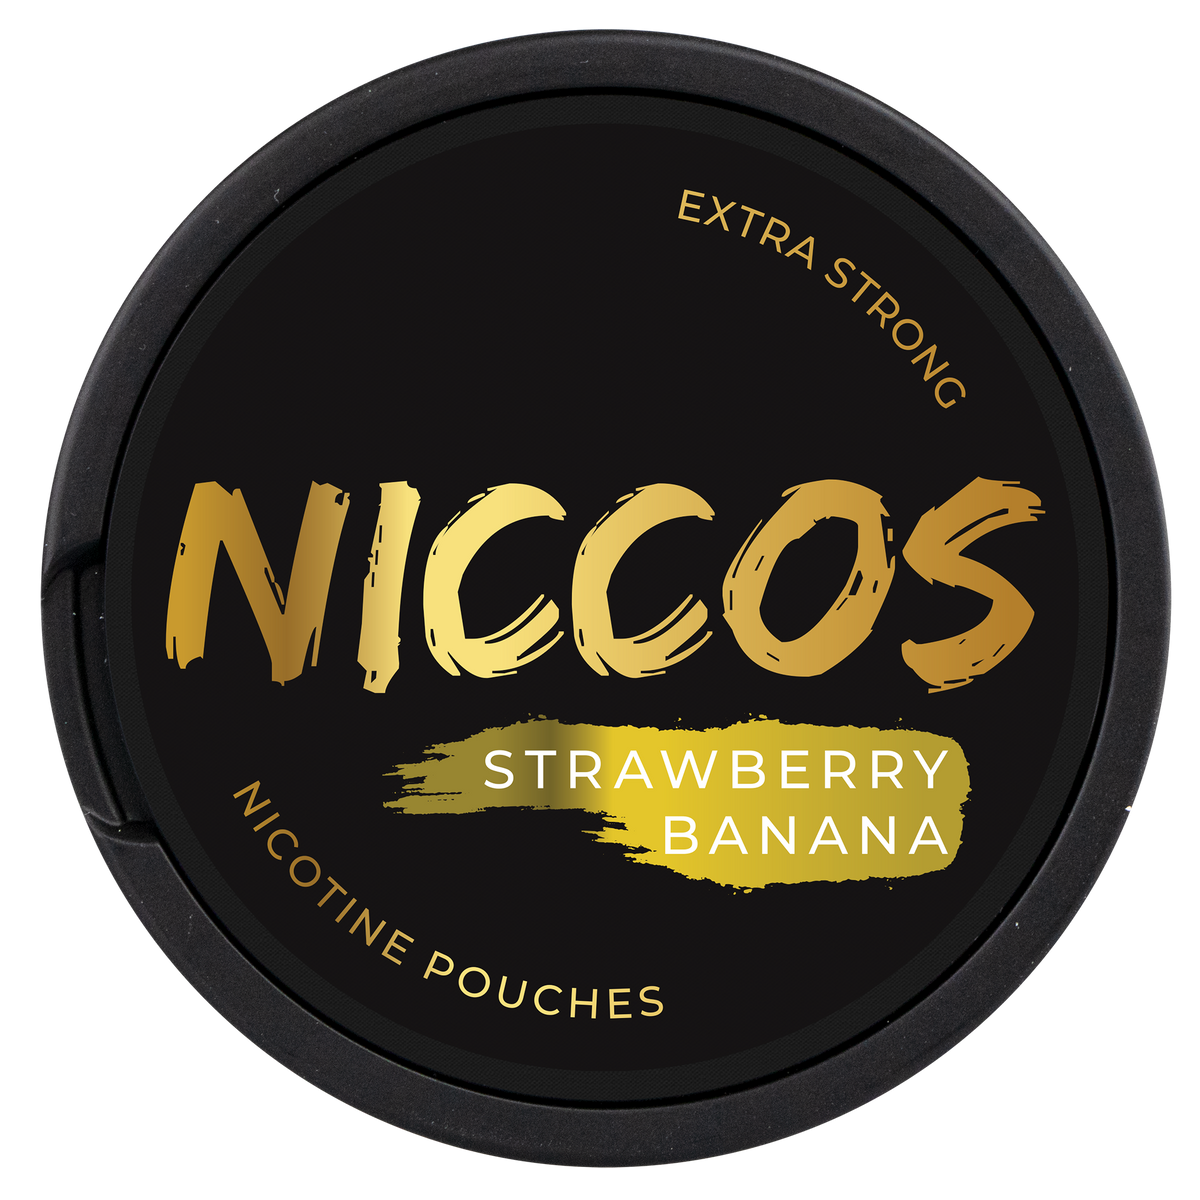 NICCOS Strawberry Banana